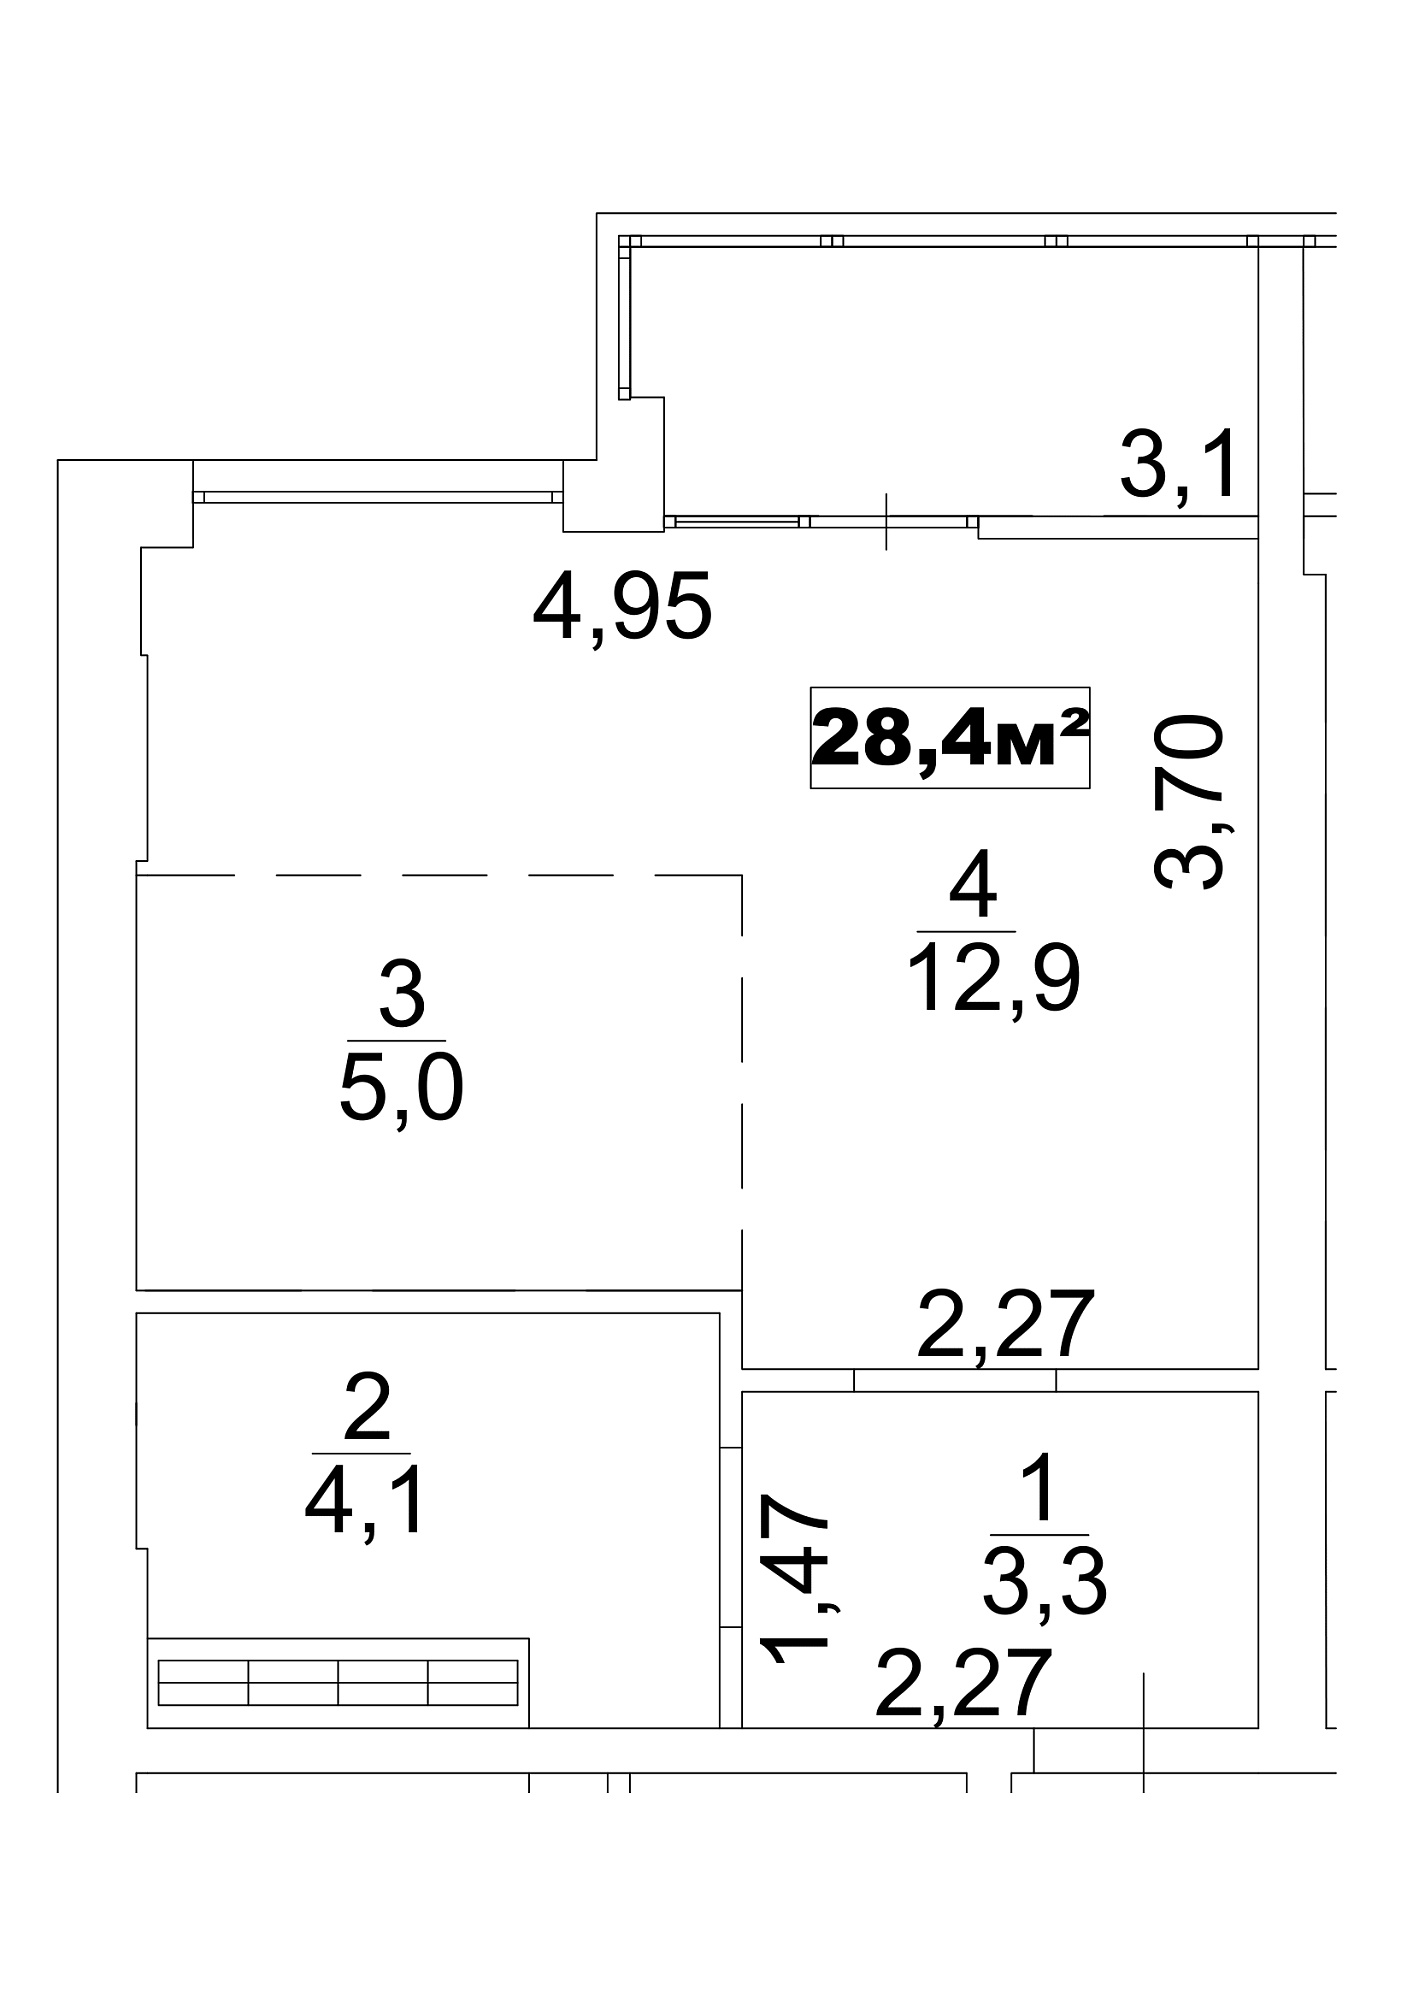 Planning Smart flats area 28.4m2, AB-13-10/0081б.